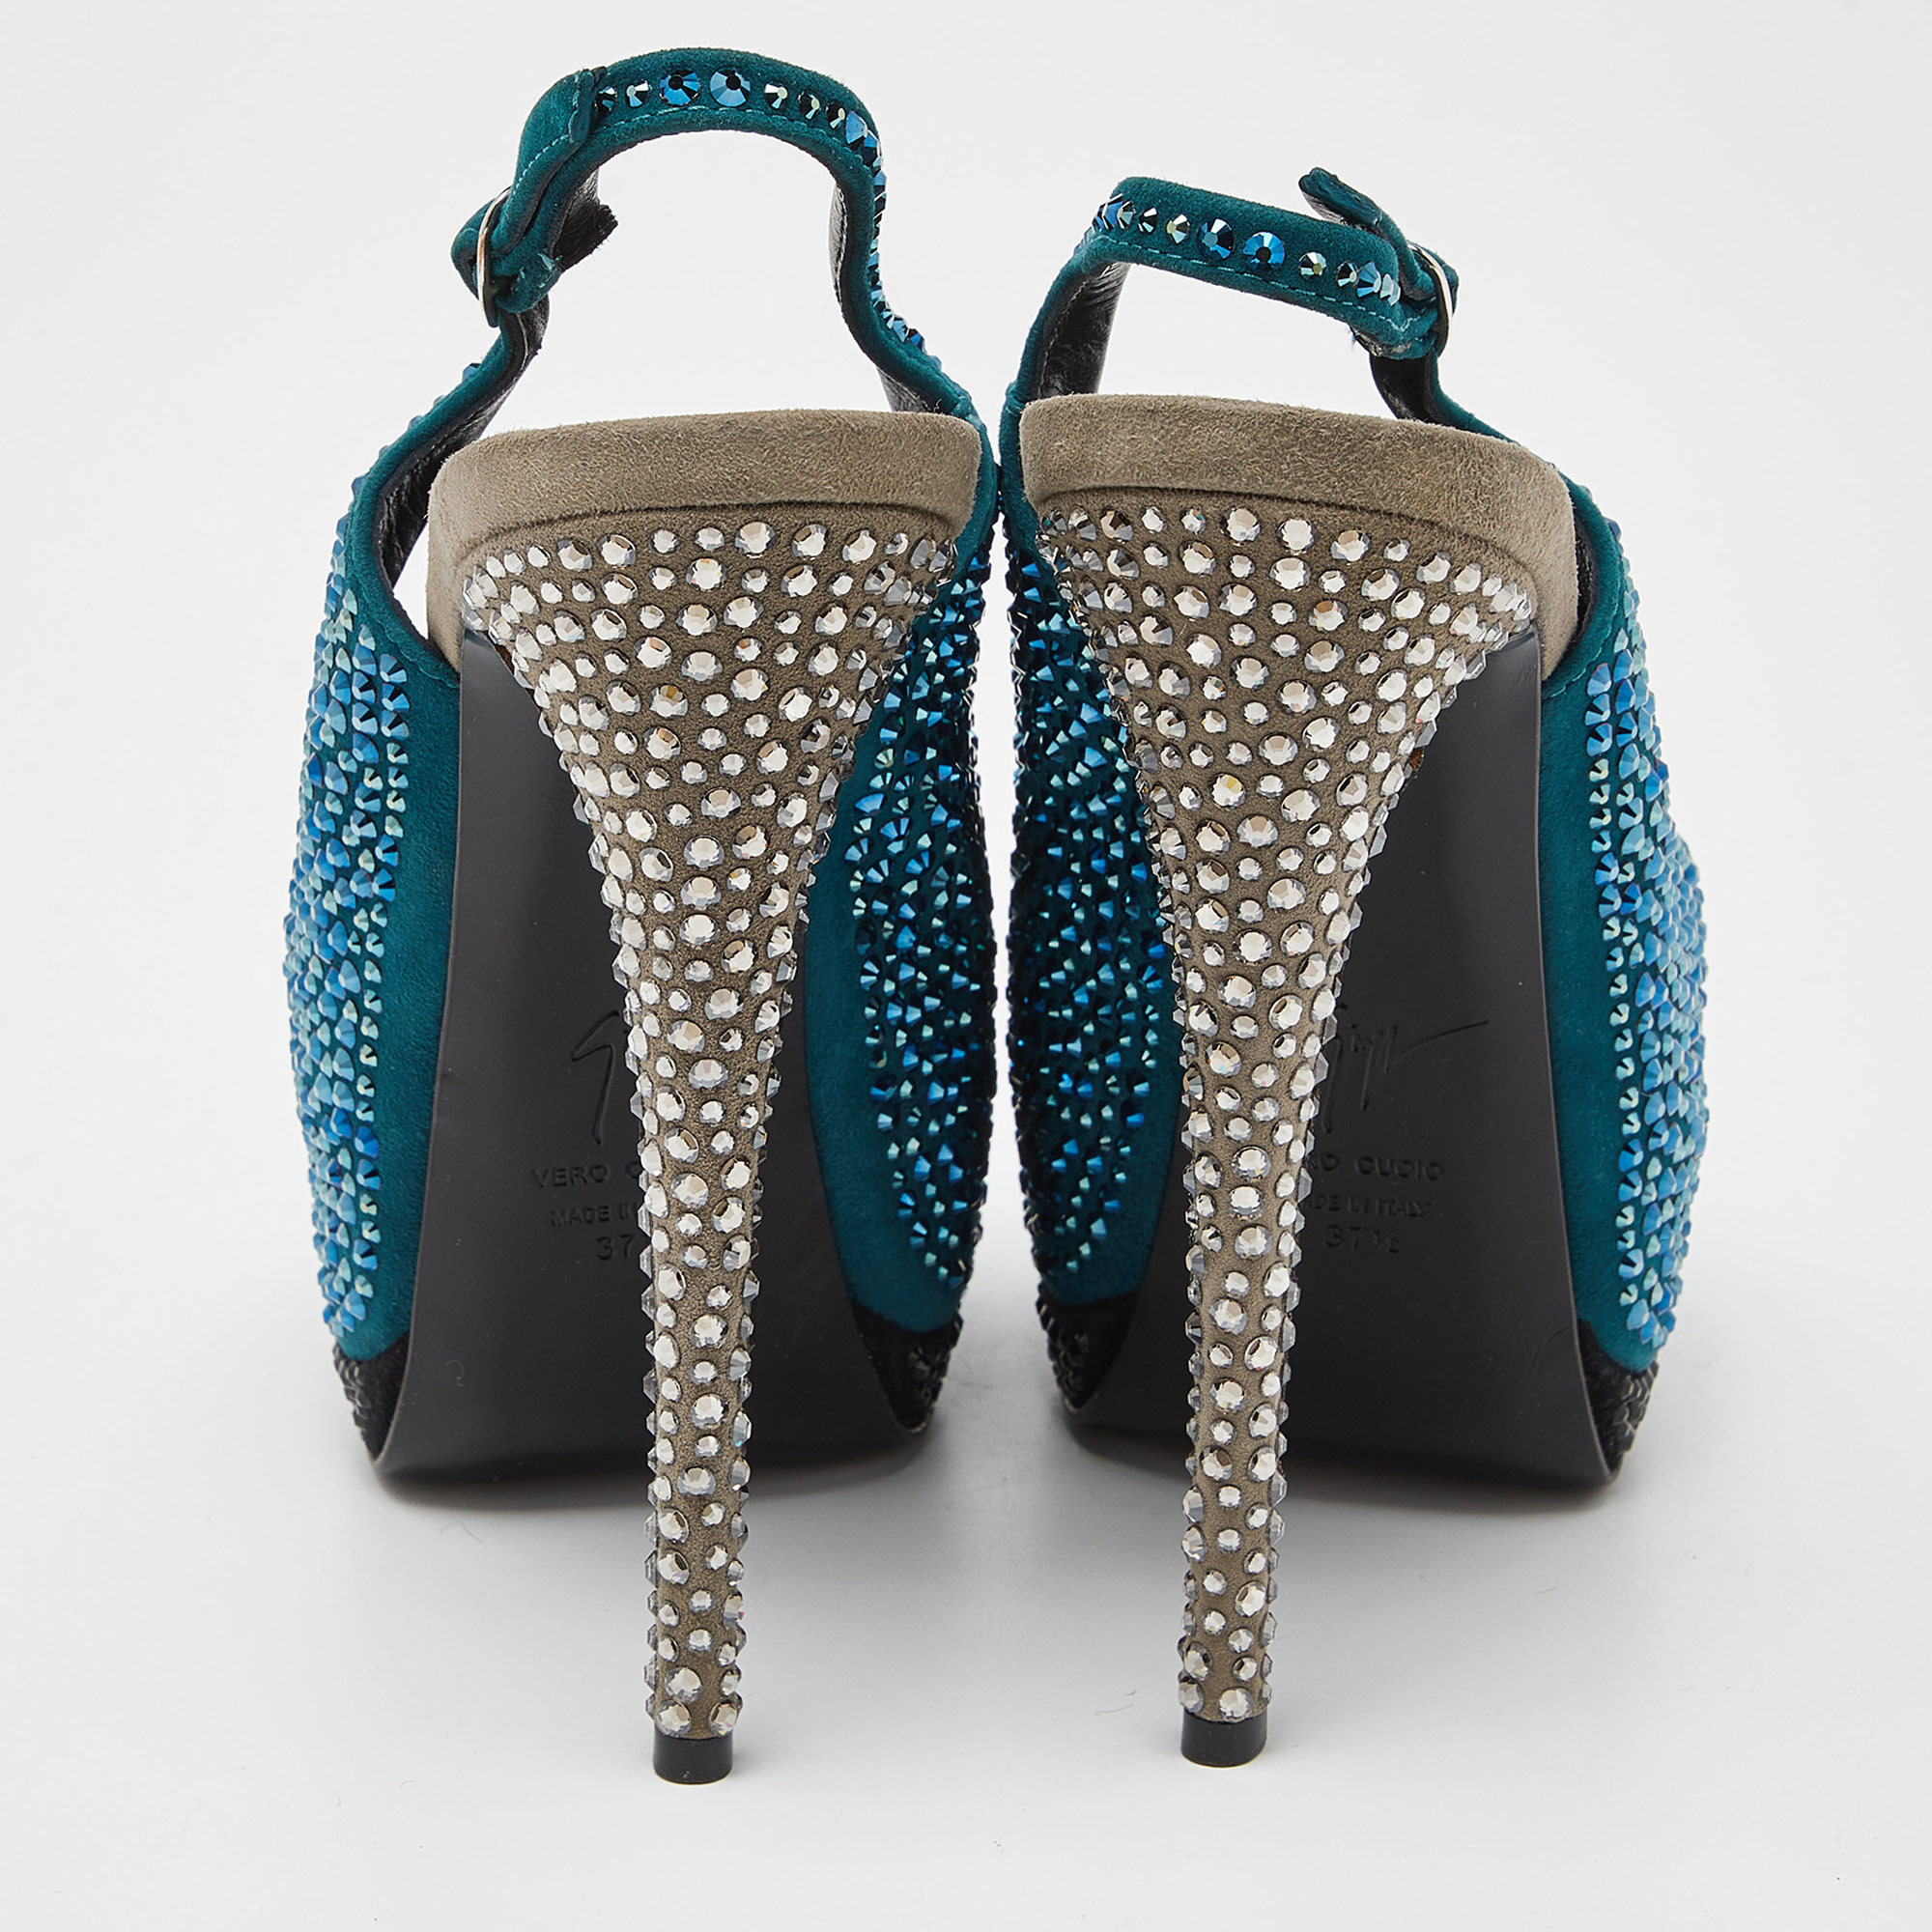 Giuseppe Zanotti Tri Color Suede Crystal Embellished Peep Toe Platform Slingback Sandals Size 37.5